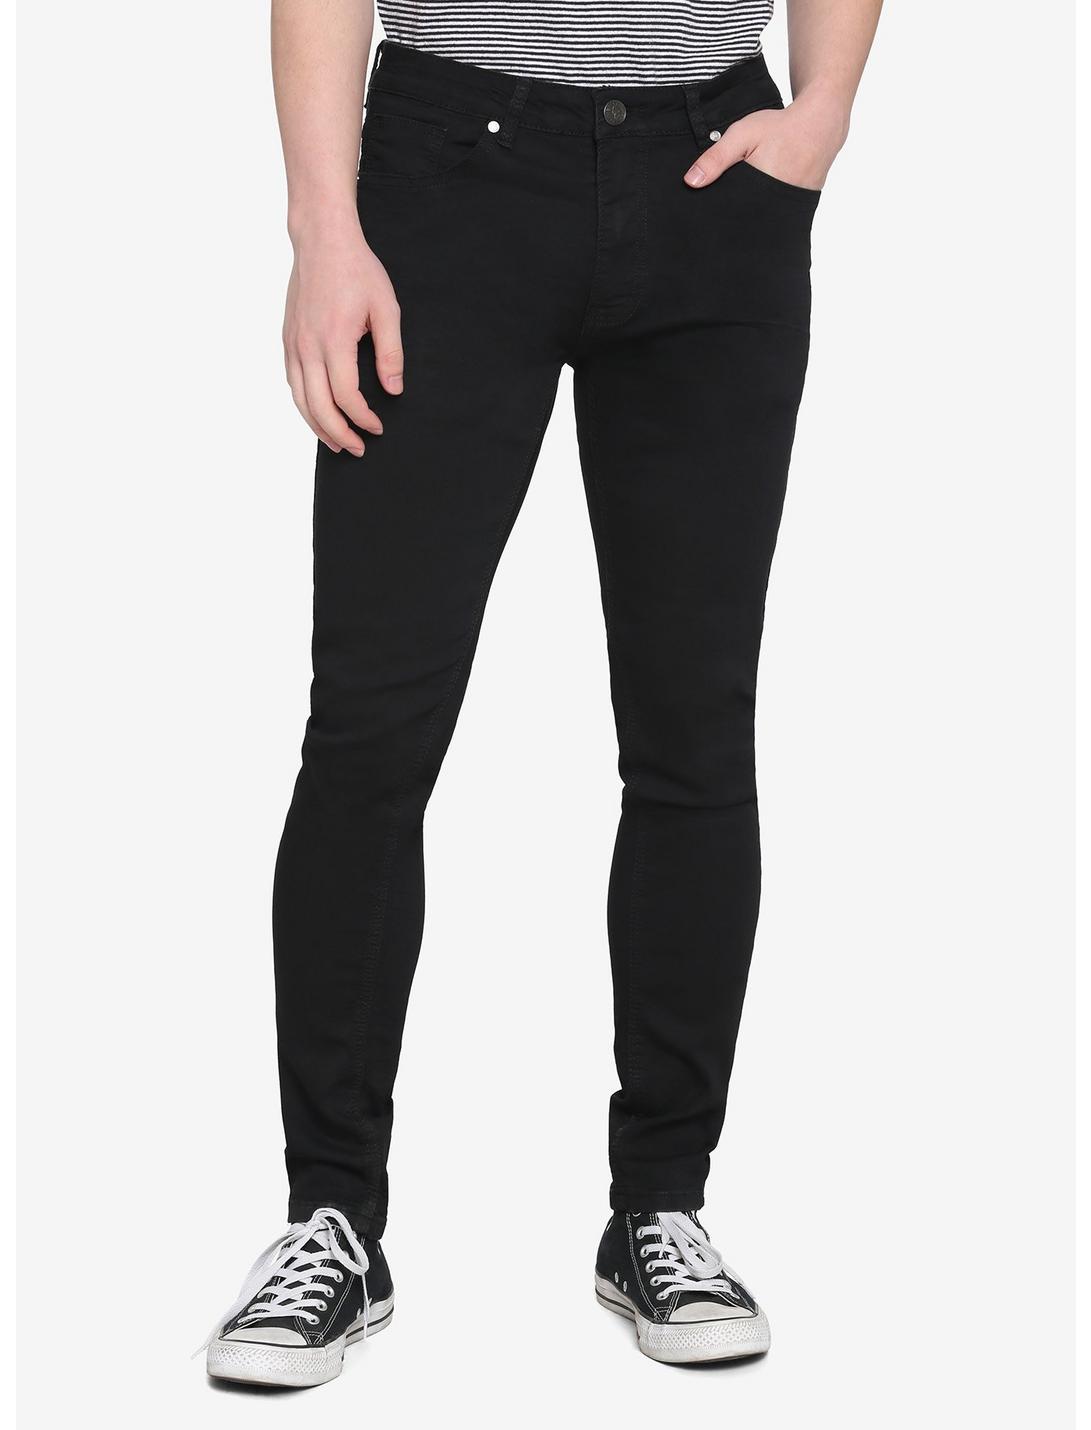 Black Denim Skinny Jeans, BLACK, hi-res